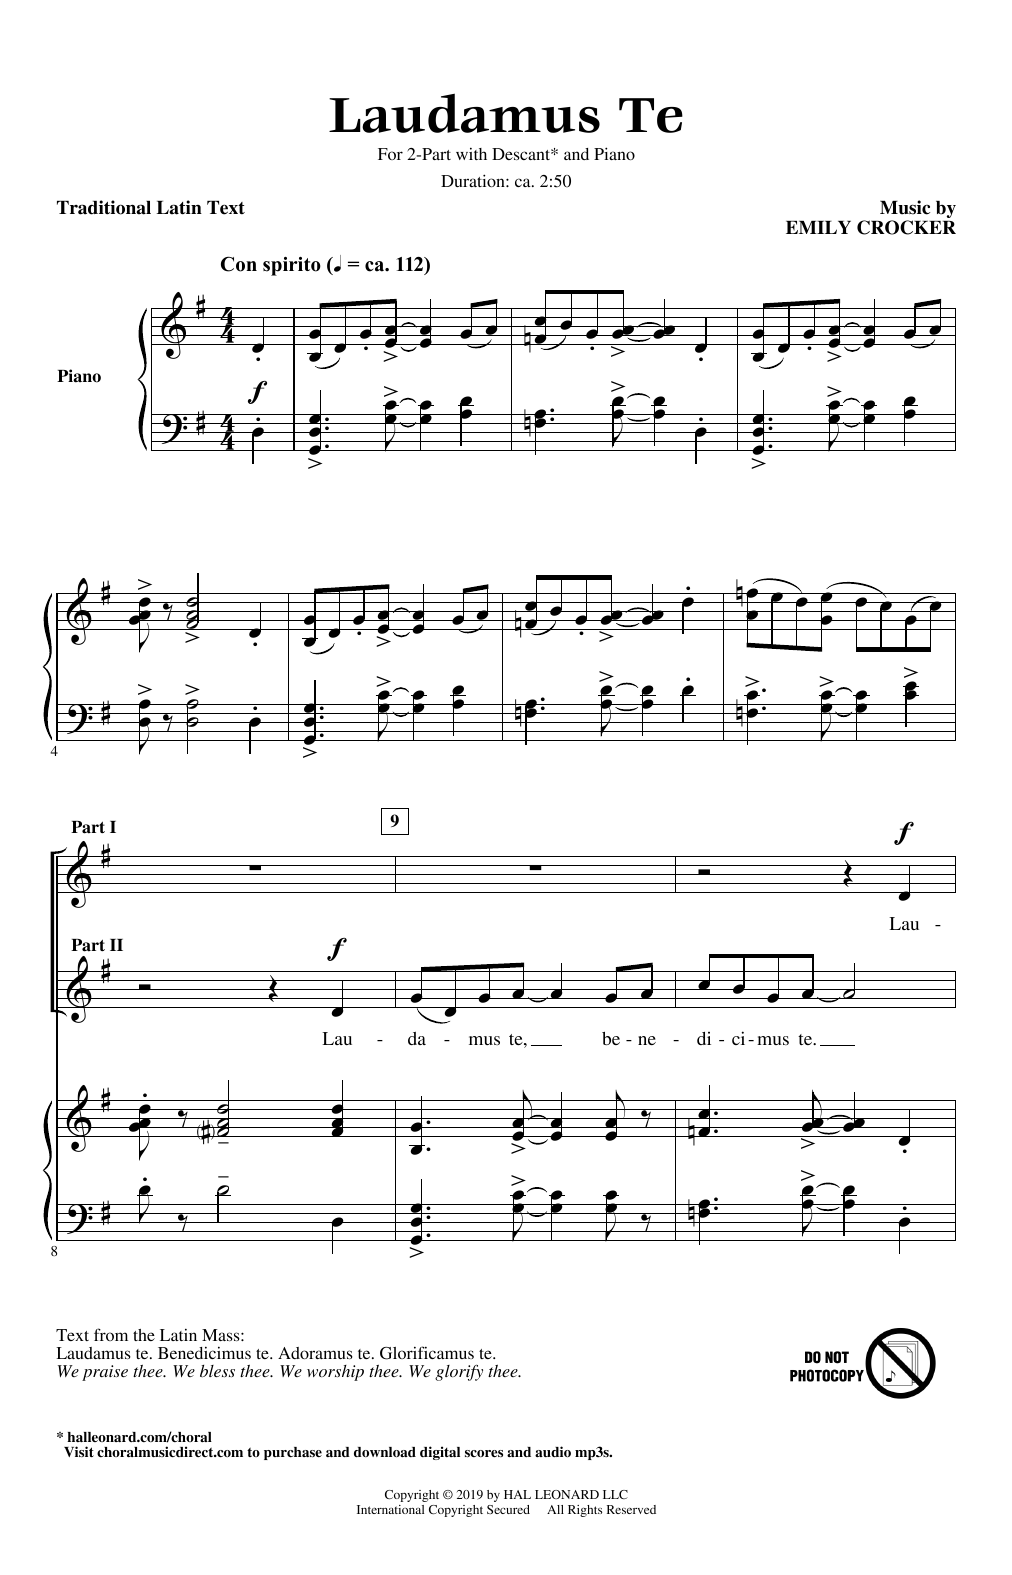 Emily Crocker Laudamus Te Sheet Music Notes & Chords for 2-Part Choir - Download or Print PDF